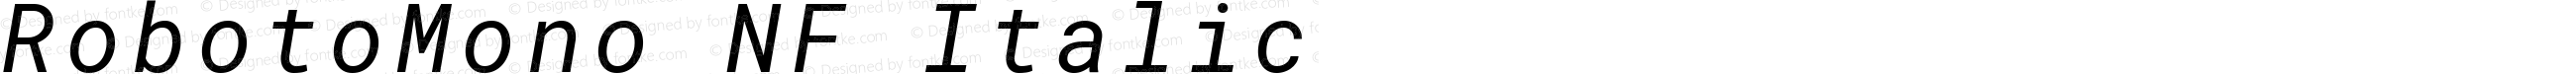 Roboto Mono Italic Nerd Font Complete Mono Windows Compatible